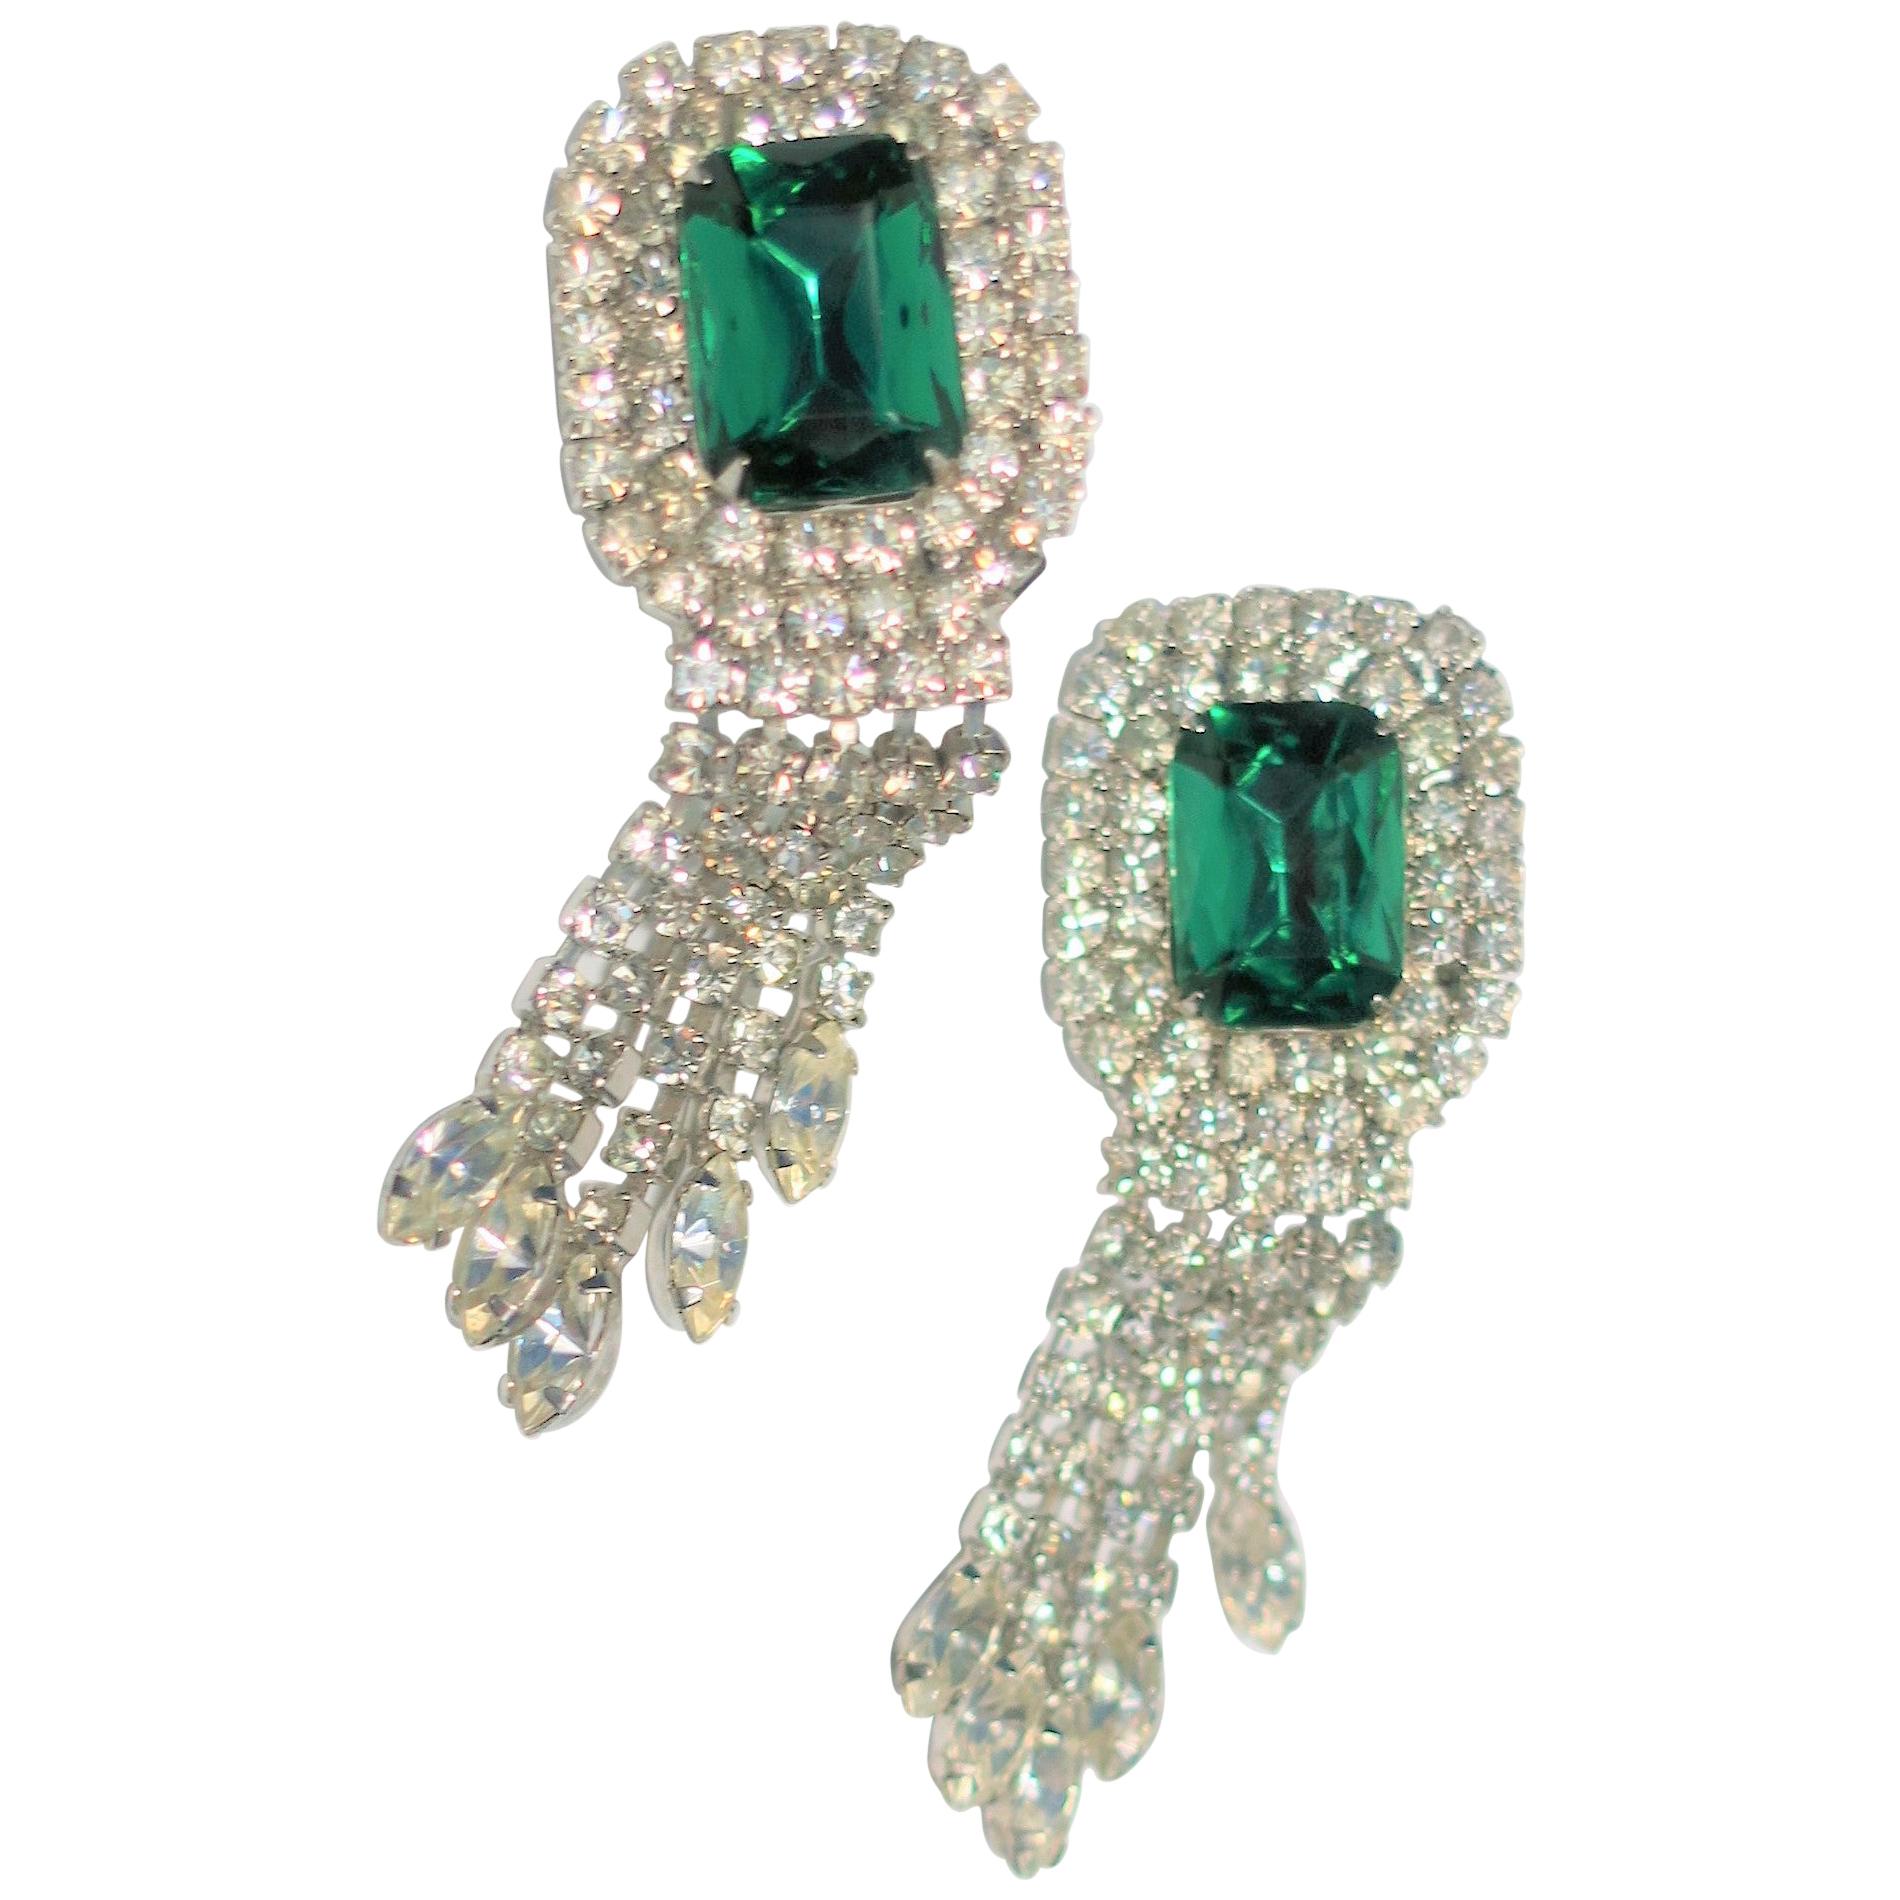 Vintage Emerald and Diamond-Esque Earrings